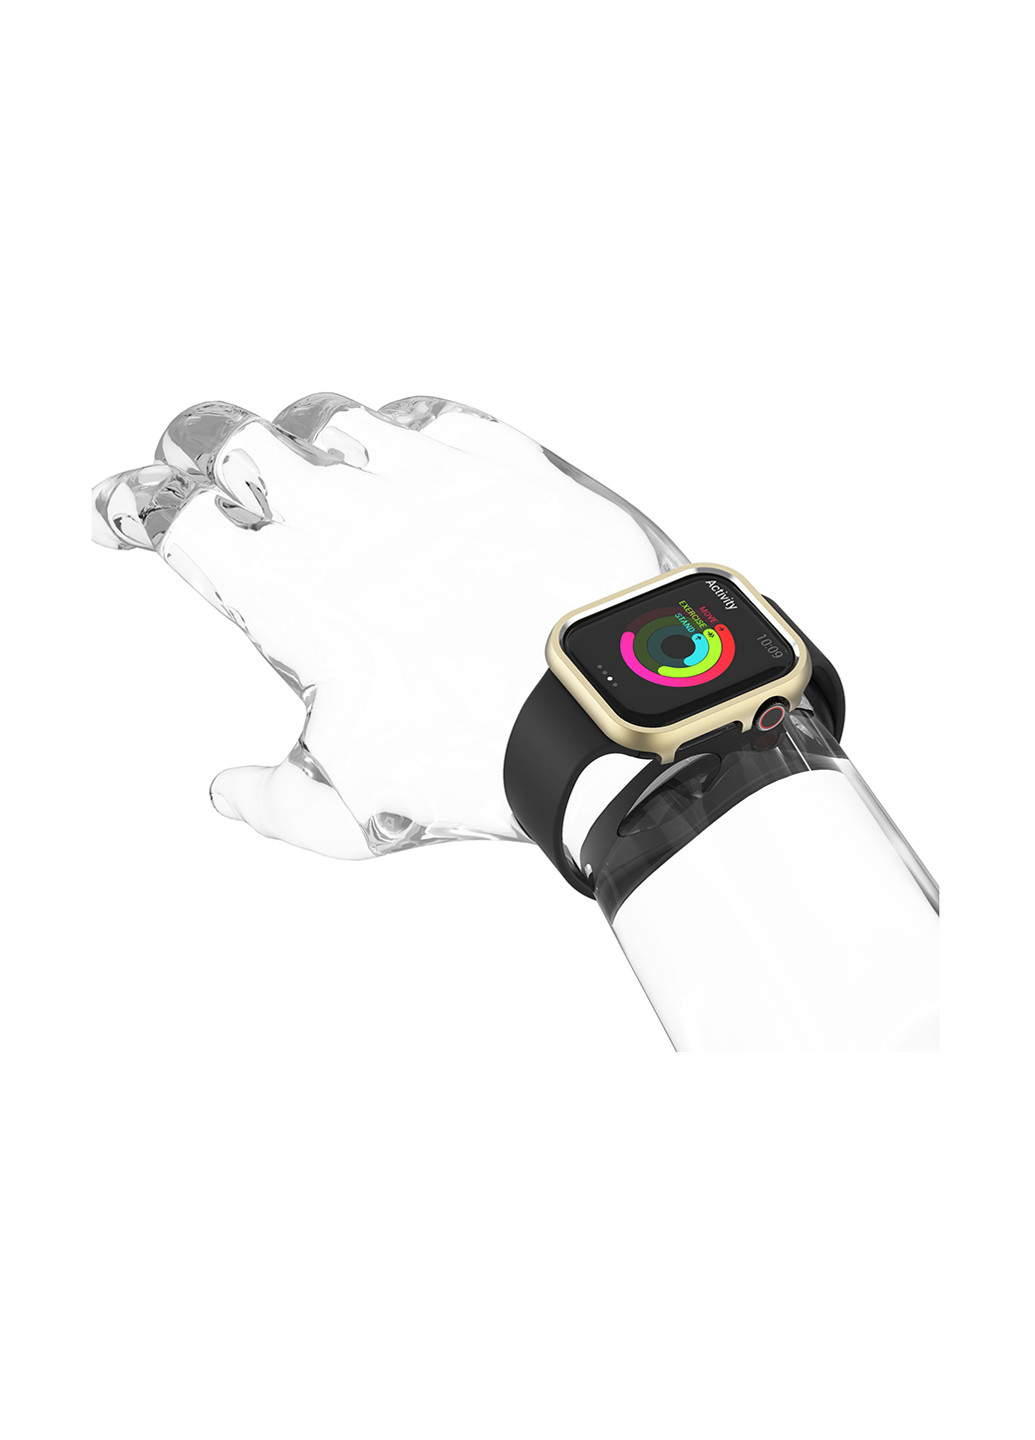 Накладка для часов Apple Watch 38/40 Aluminium Gold XoKo накладка для часов apple watch 38/40 xoko aluminium gold (143704626)